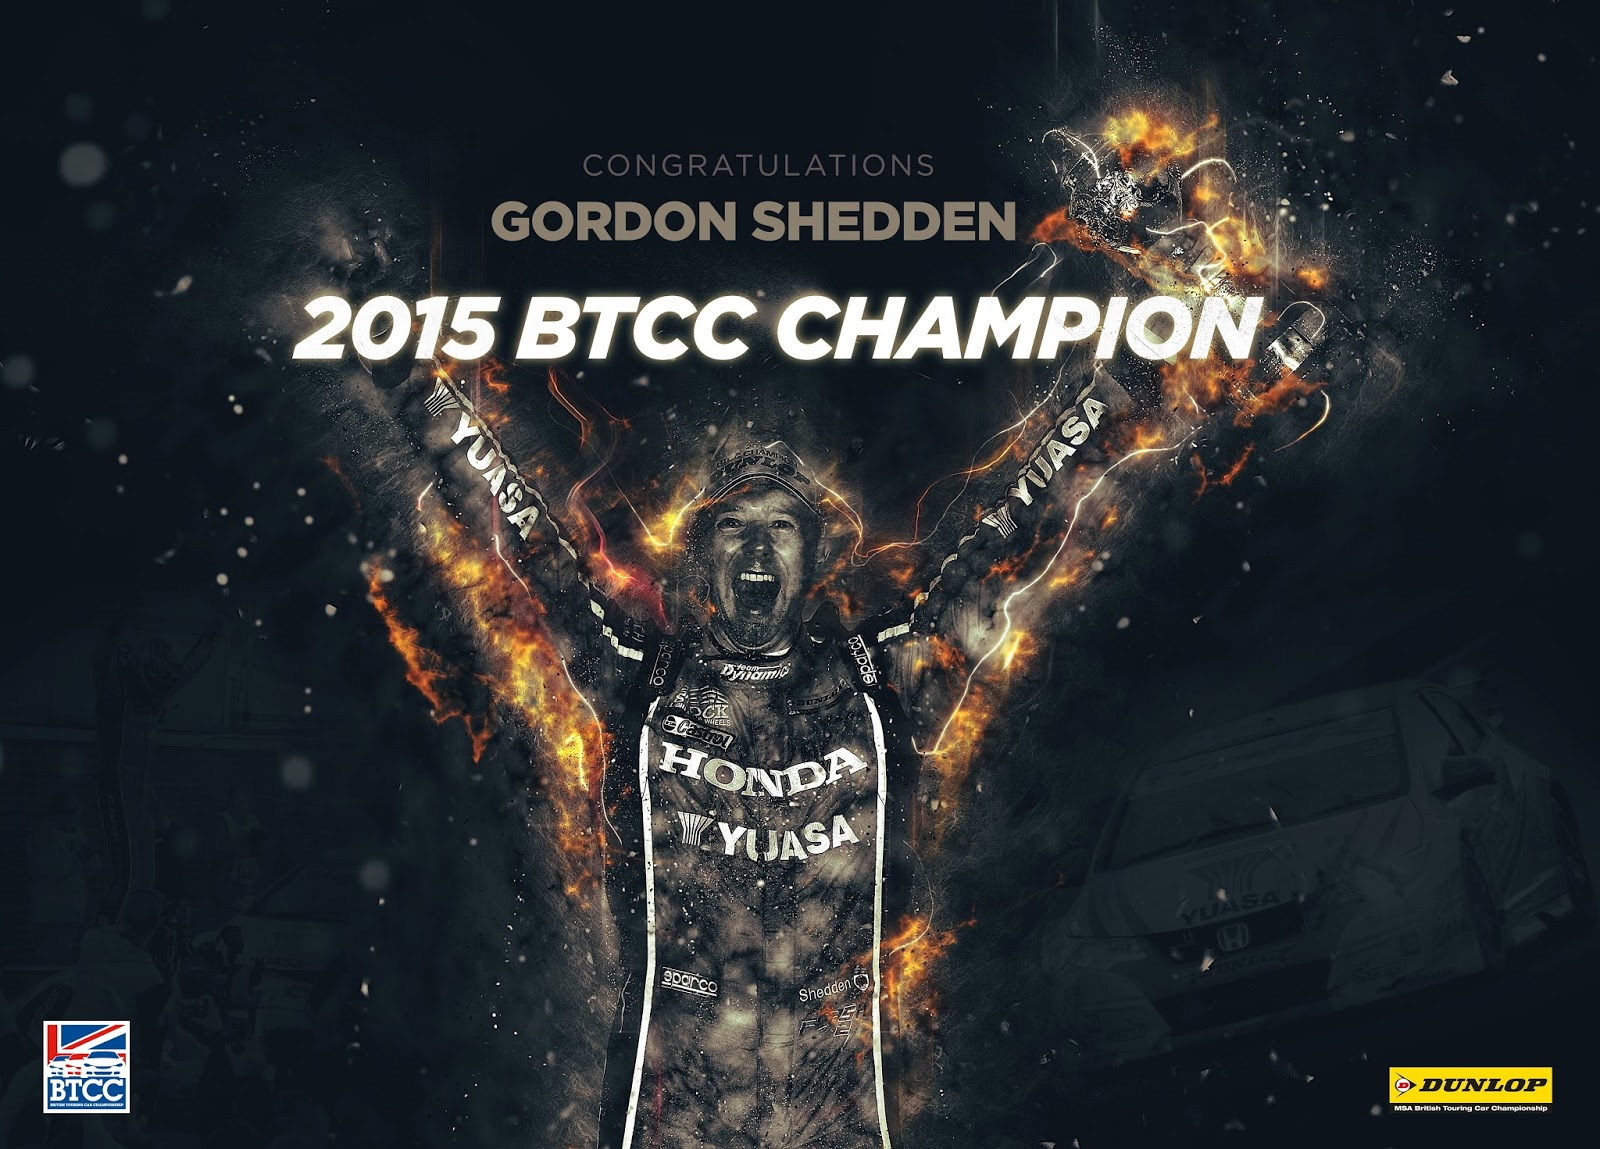 BTCC 2015 Champions Gordon Shedden Η συλλογή τίτλων μόλις ξεκίνησε για το νέο Civic Type R